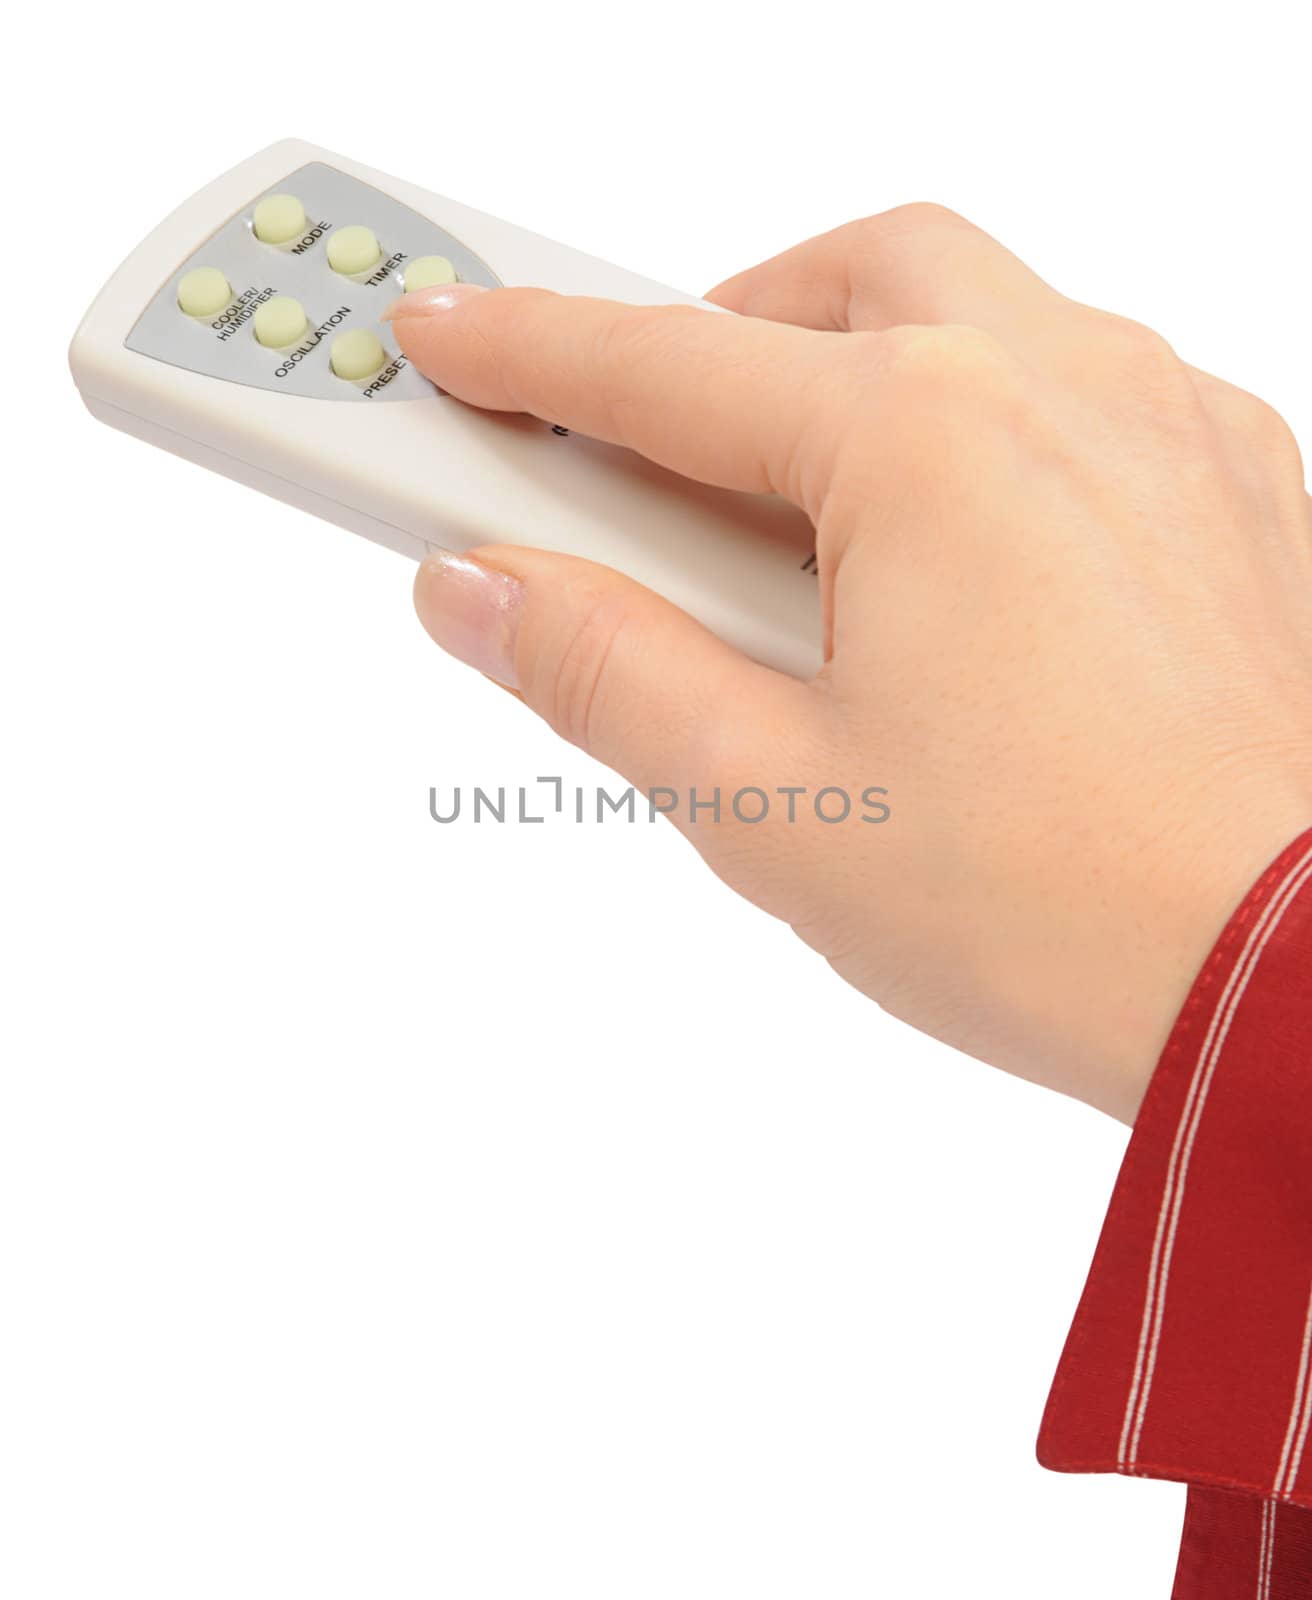 remote control unit by dyoma